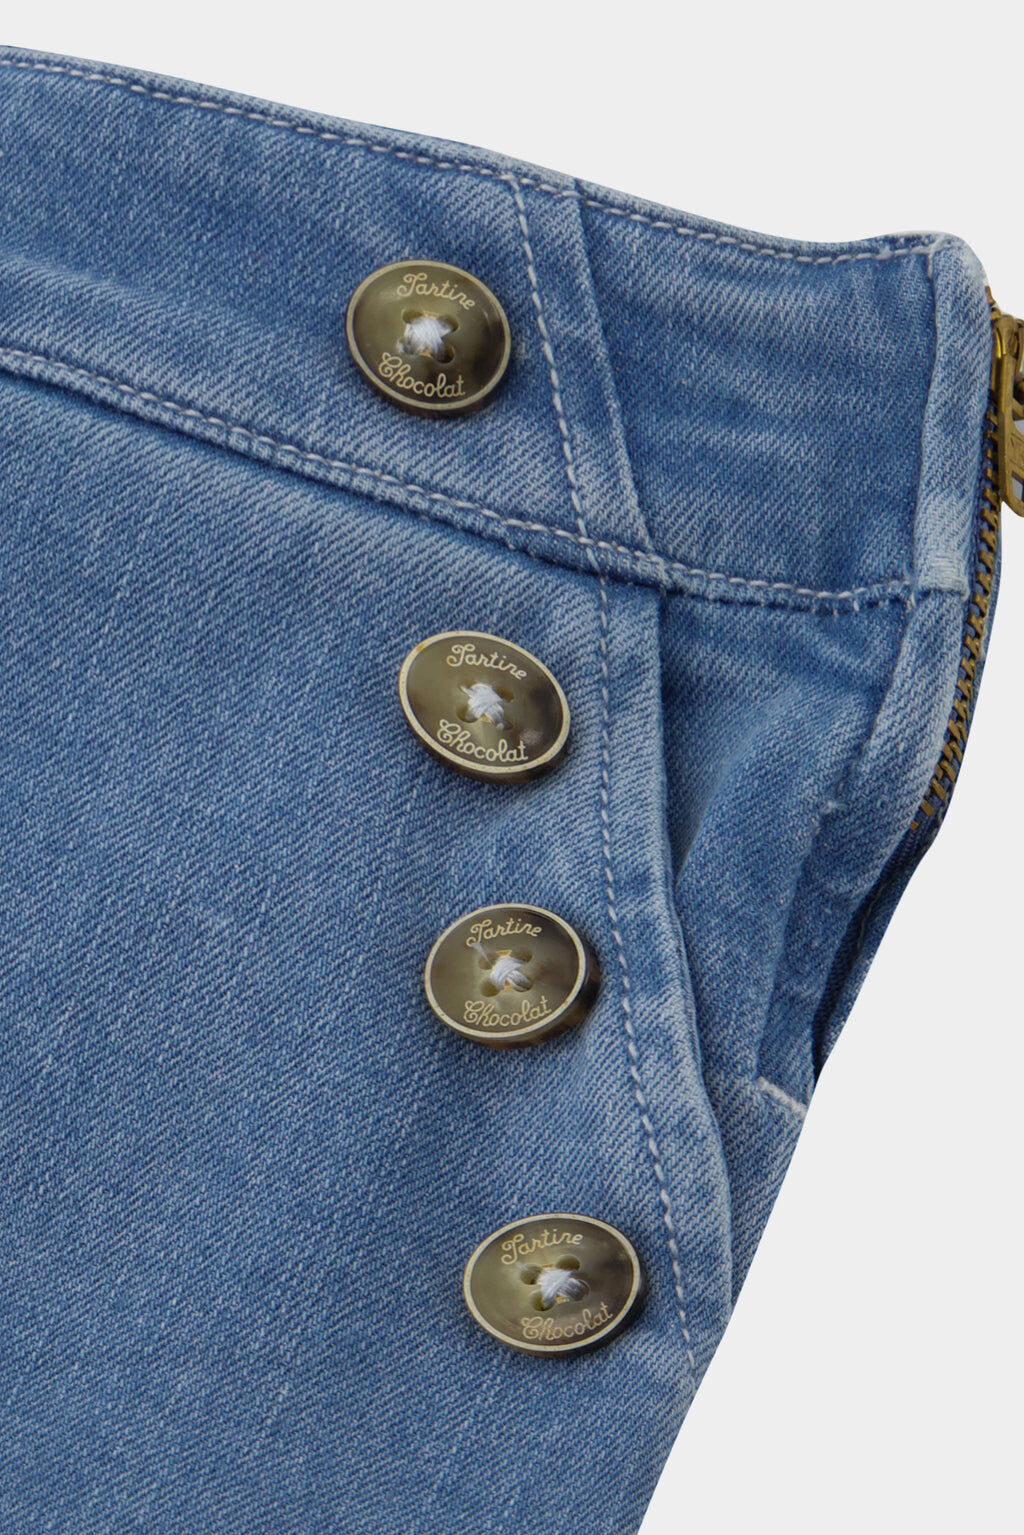 Jeans - Sky blue Buttons